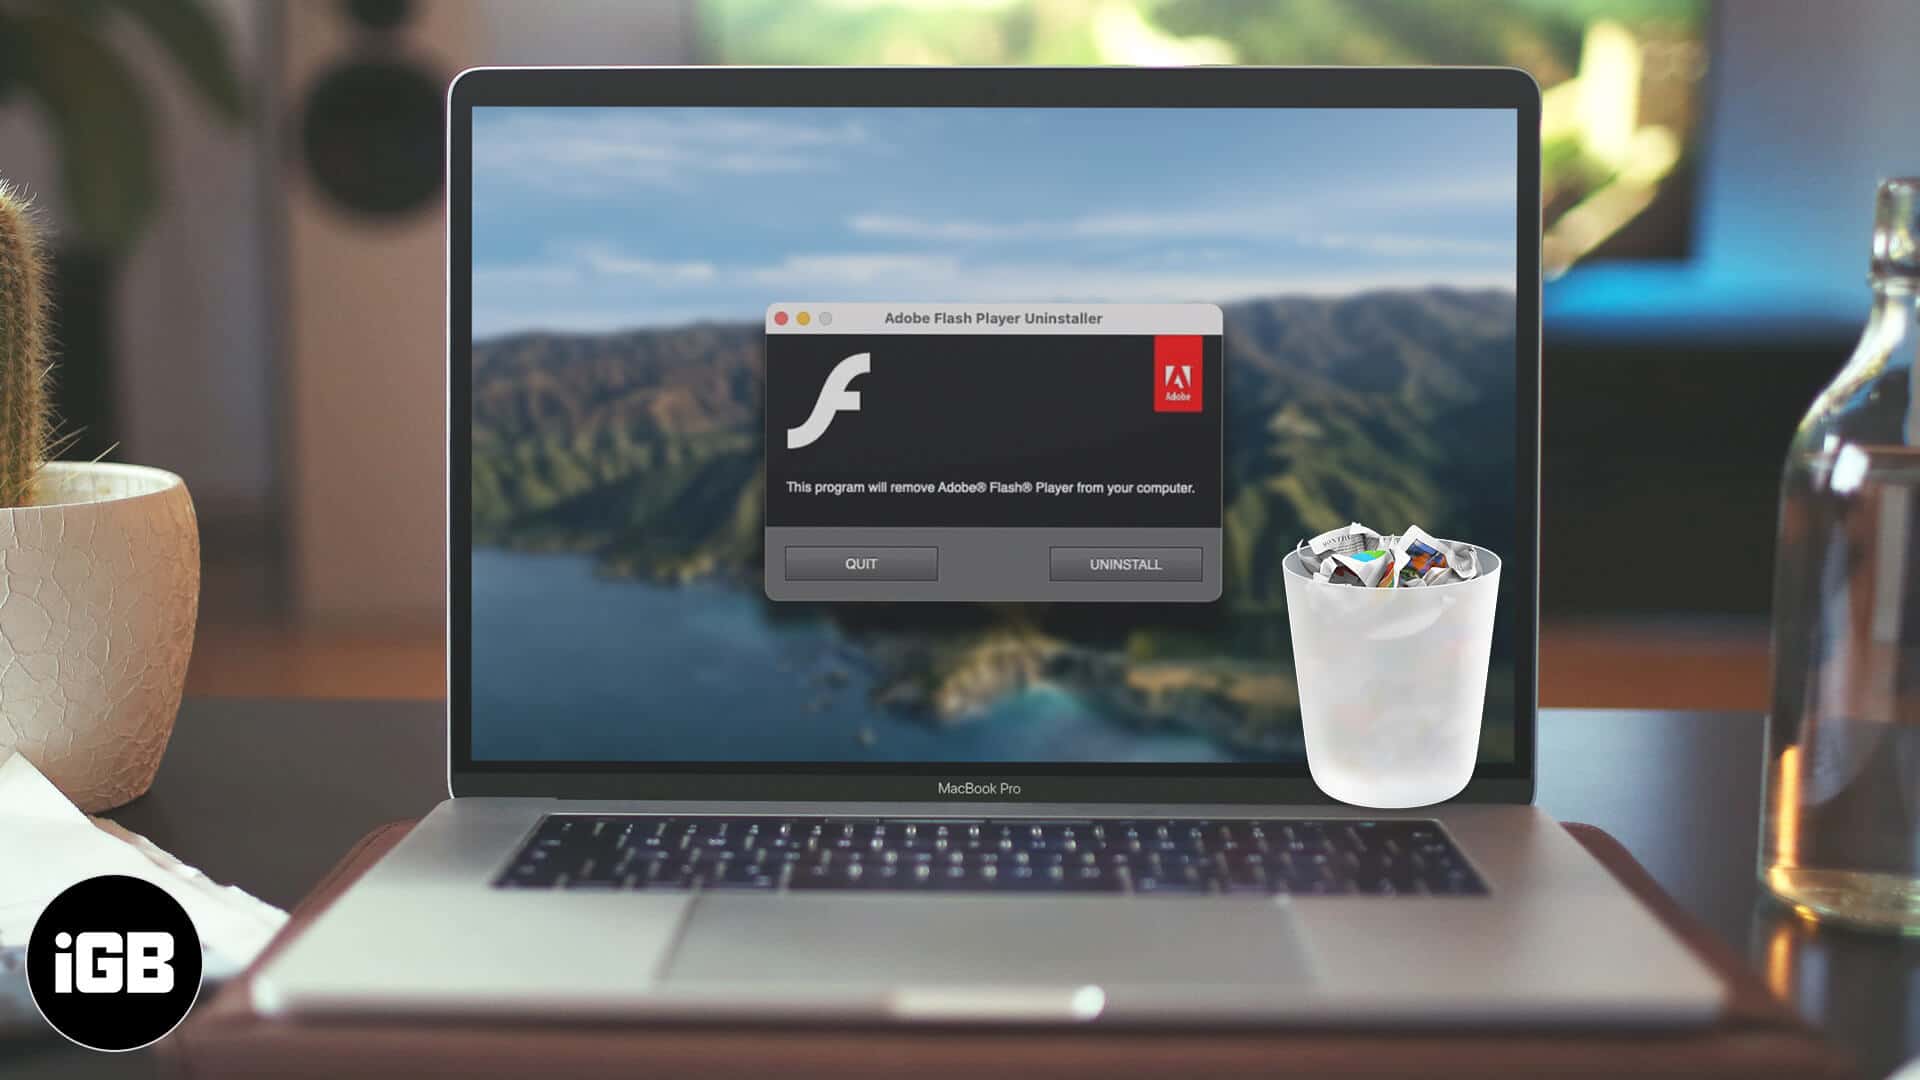 Adobe Flash Player For Mac